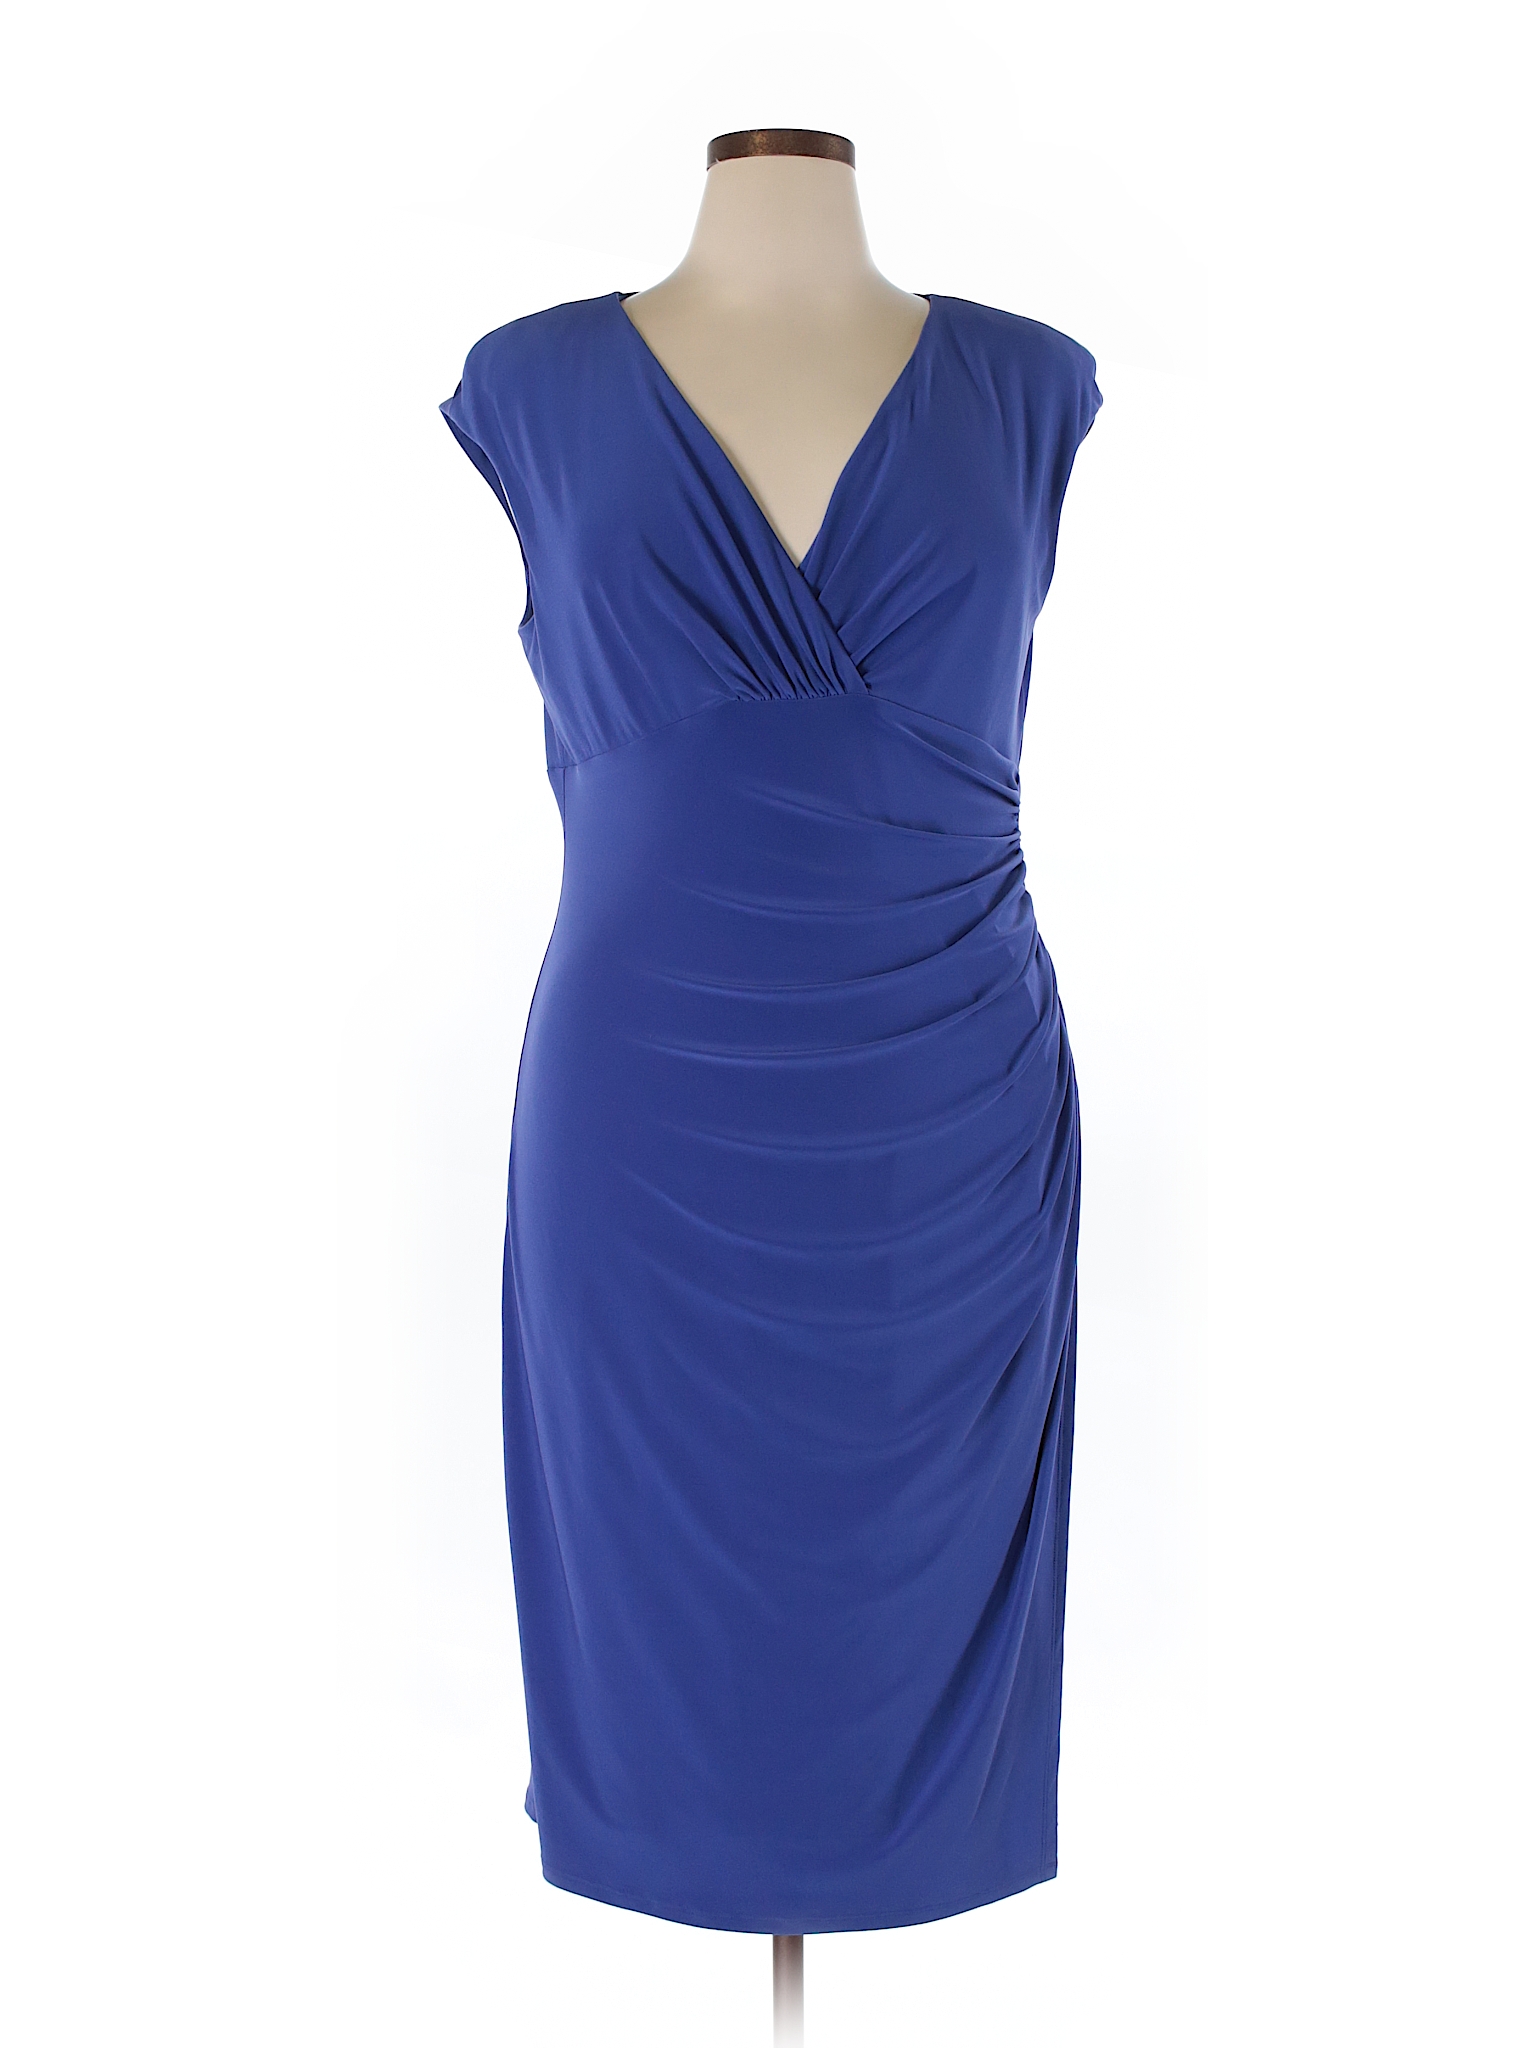 Lauren by Ralph Lauren Solid Purple Cocktail Dress Size 16 - 80% off ...